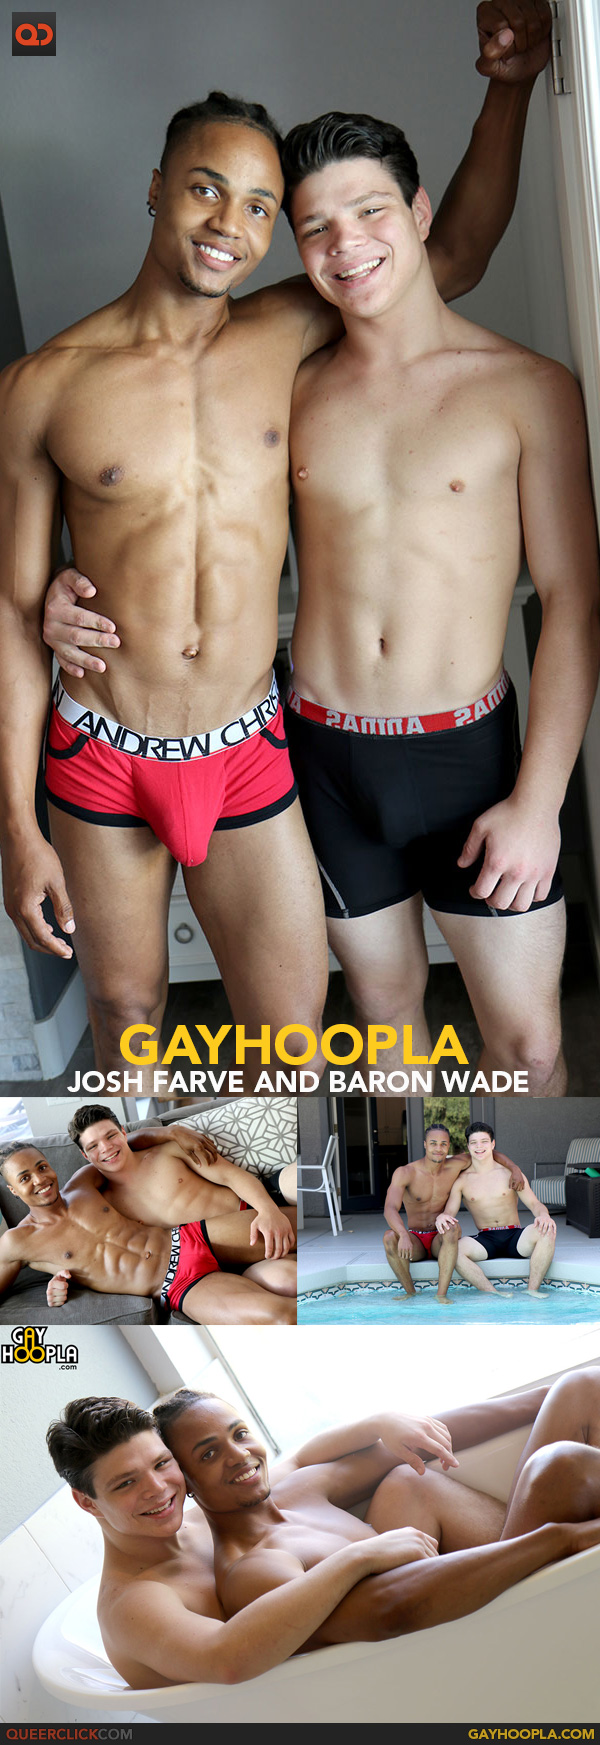 GayHoopla: Josh Farve and Baron Wade